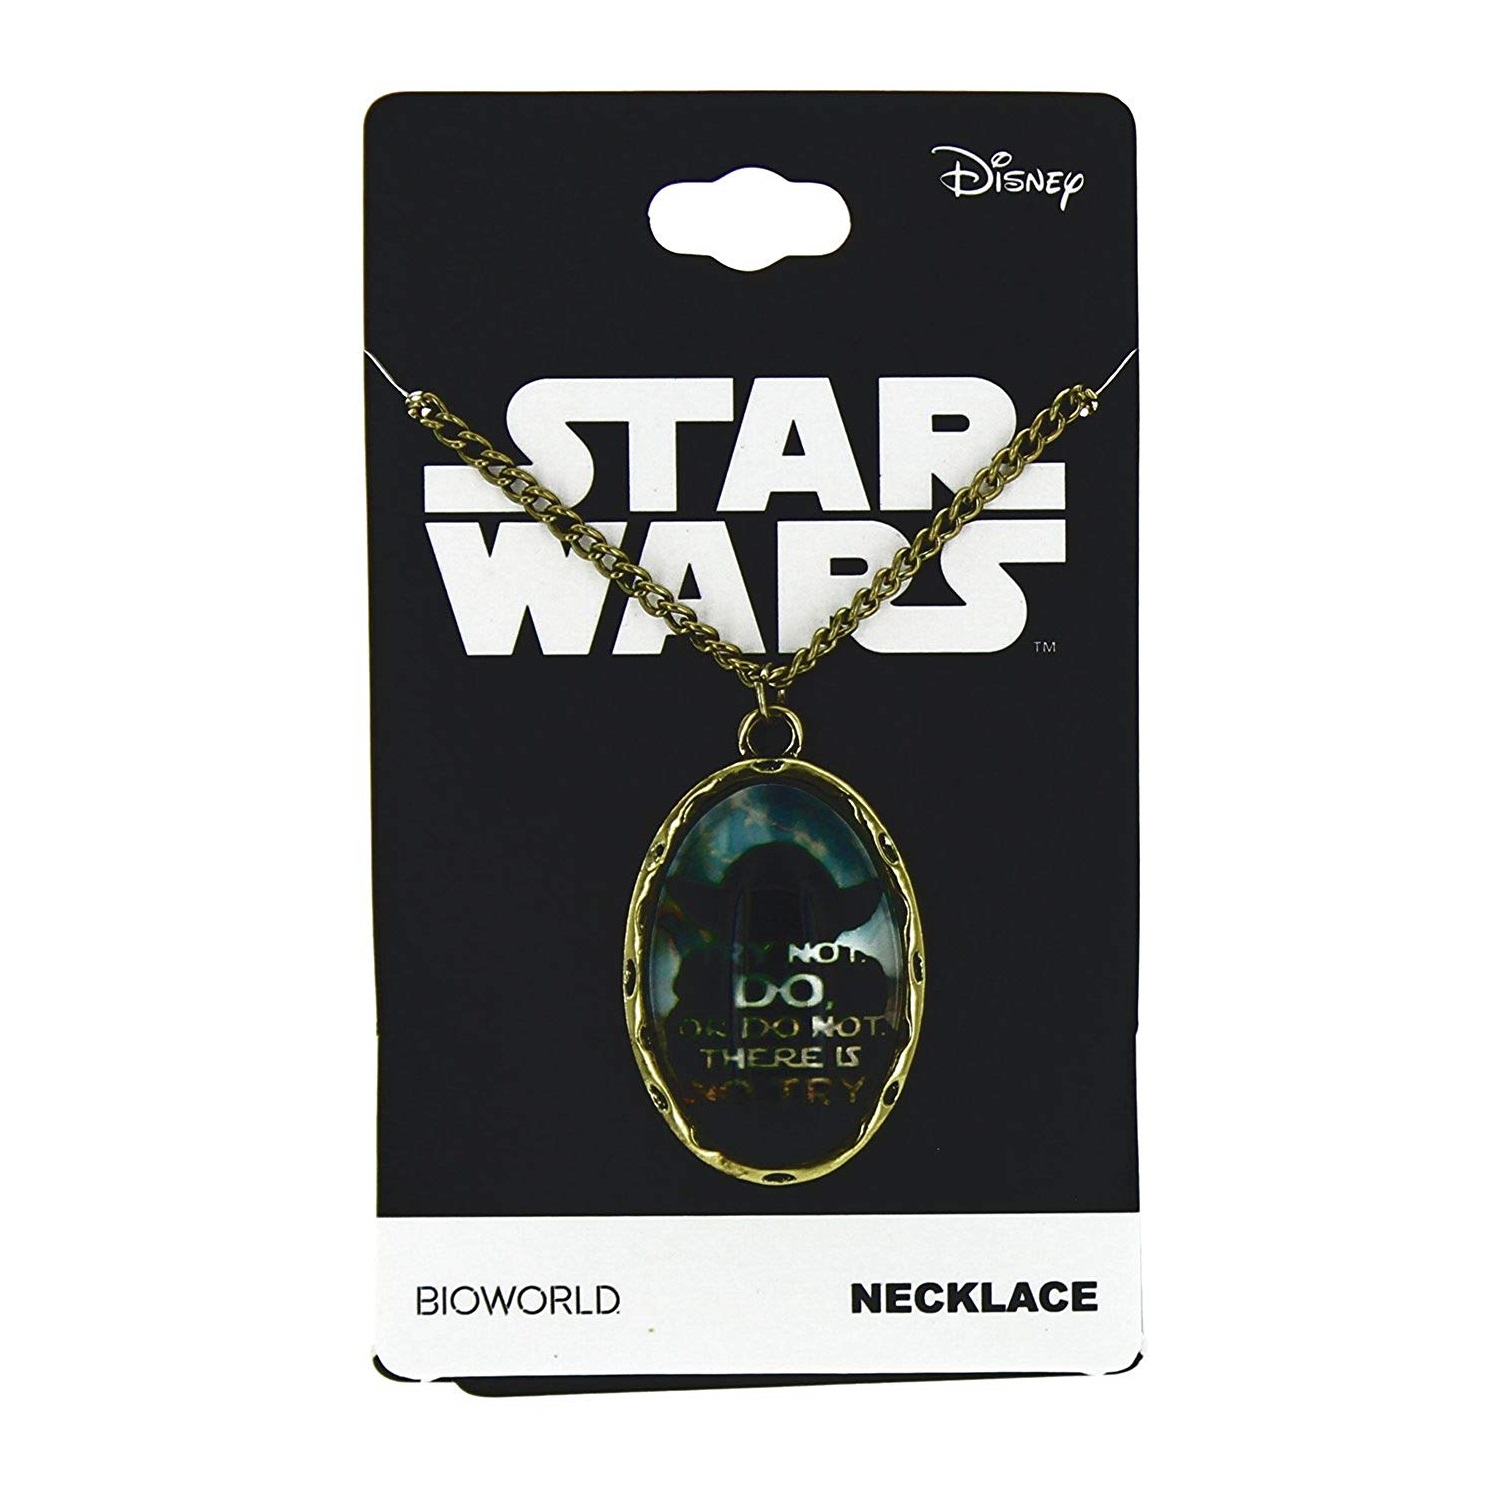 Bioworld x Star Wars Yoda Cameo Quote Necklace on Amazon